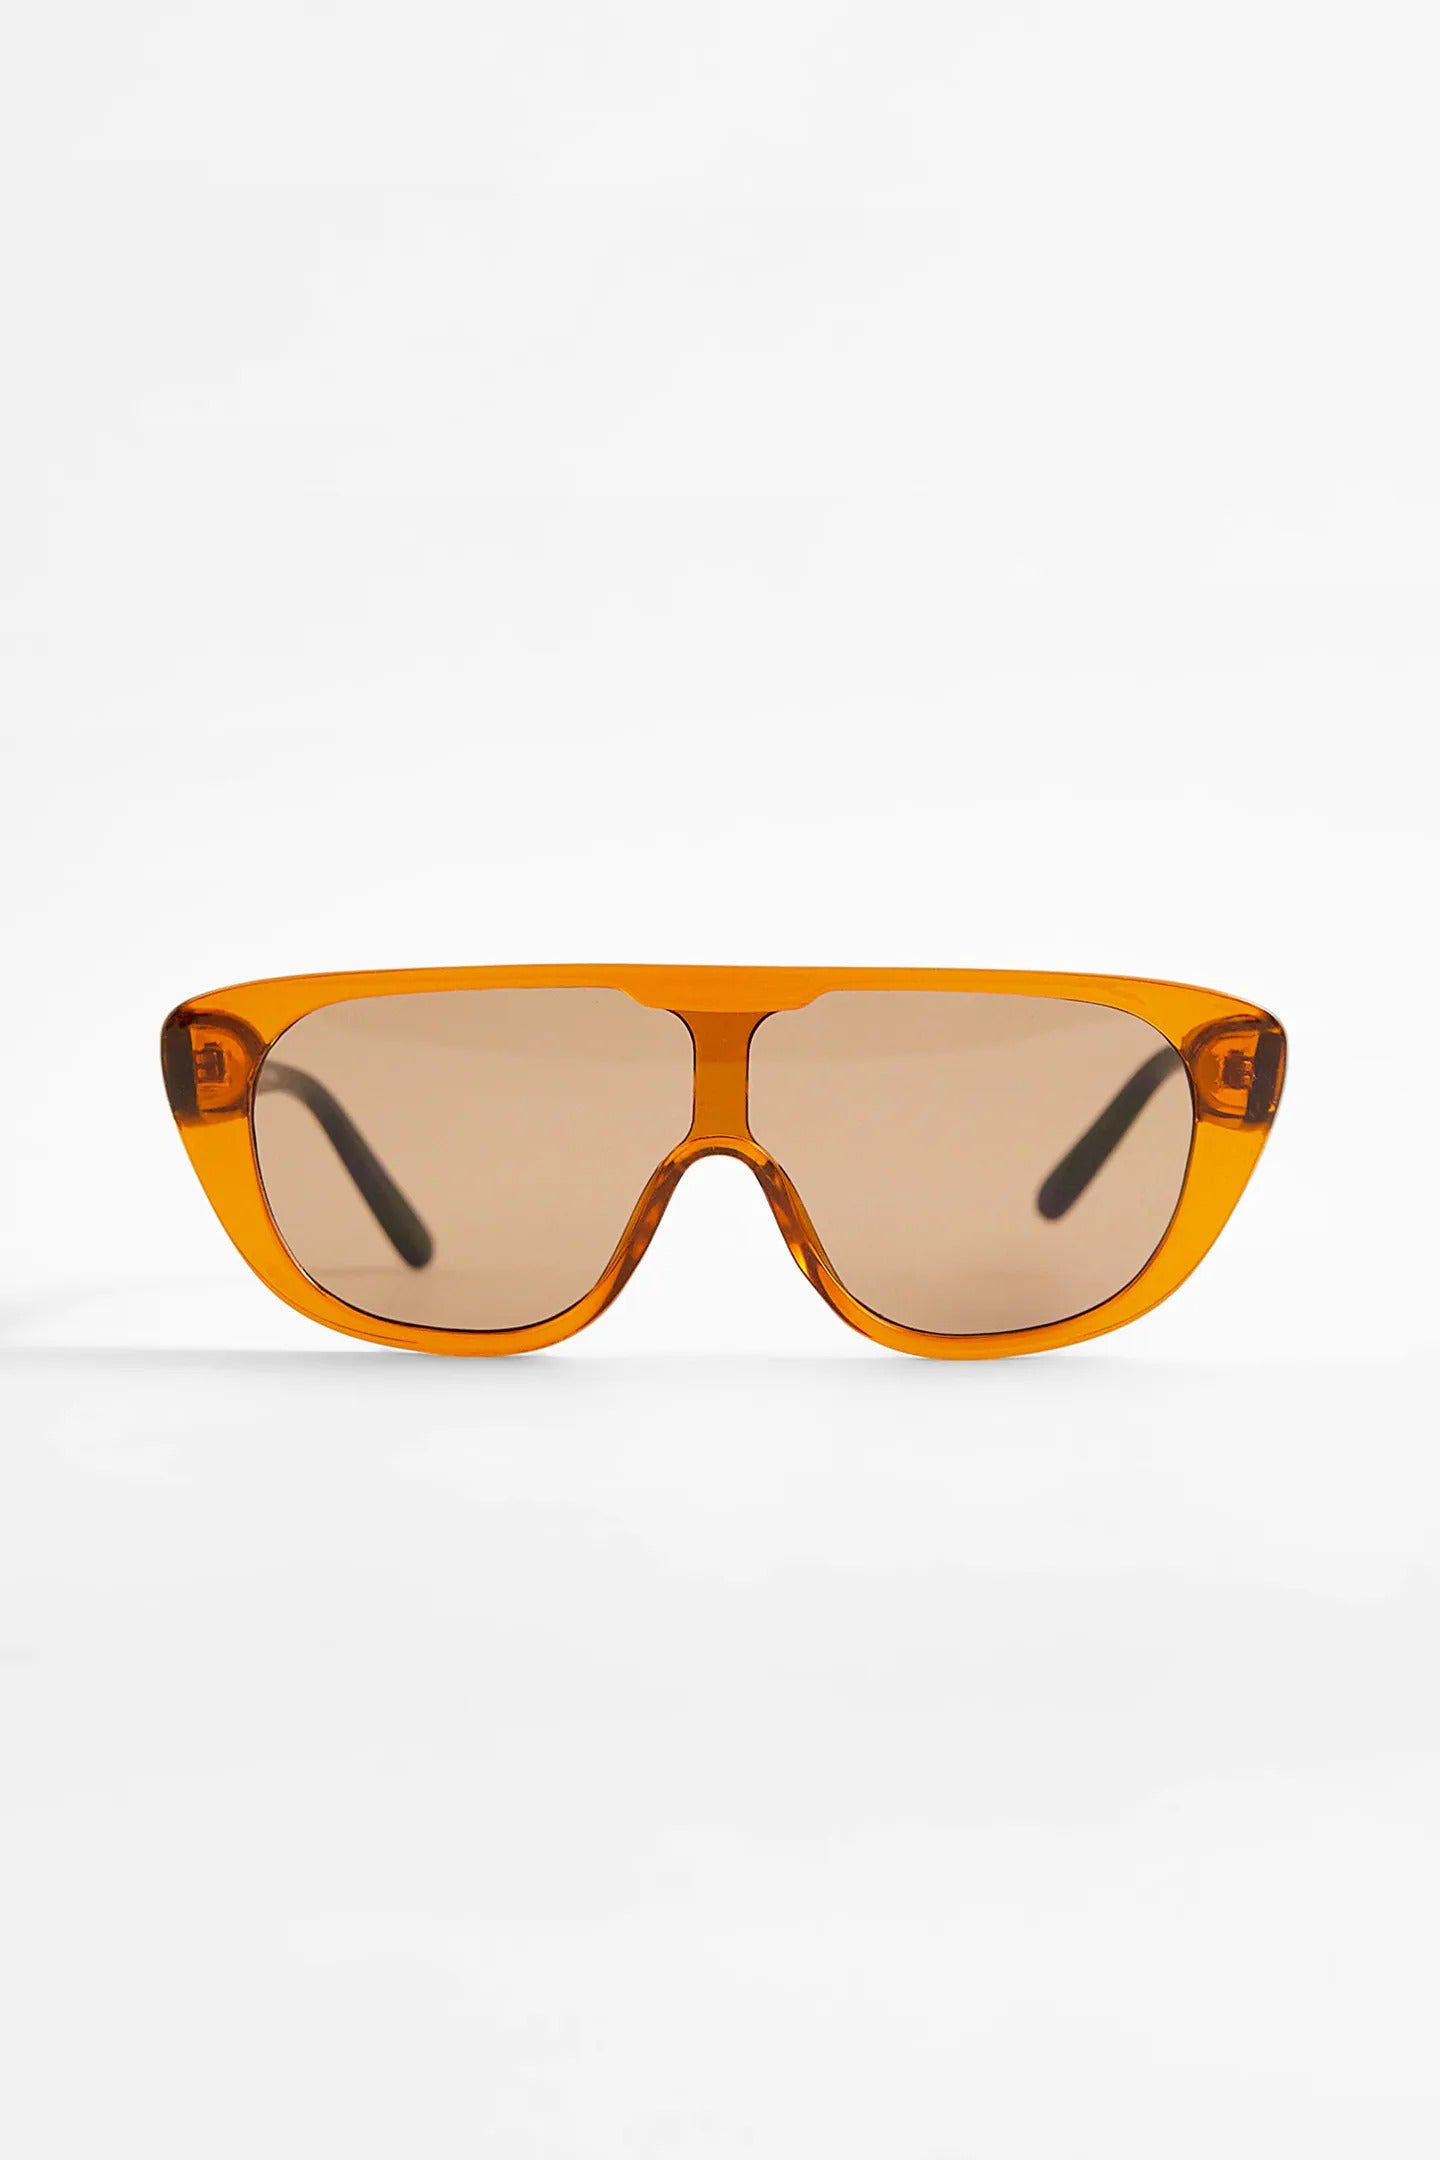 Zara + Visor Sunglasses